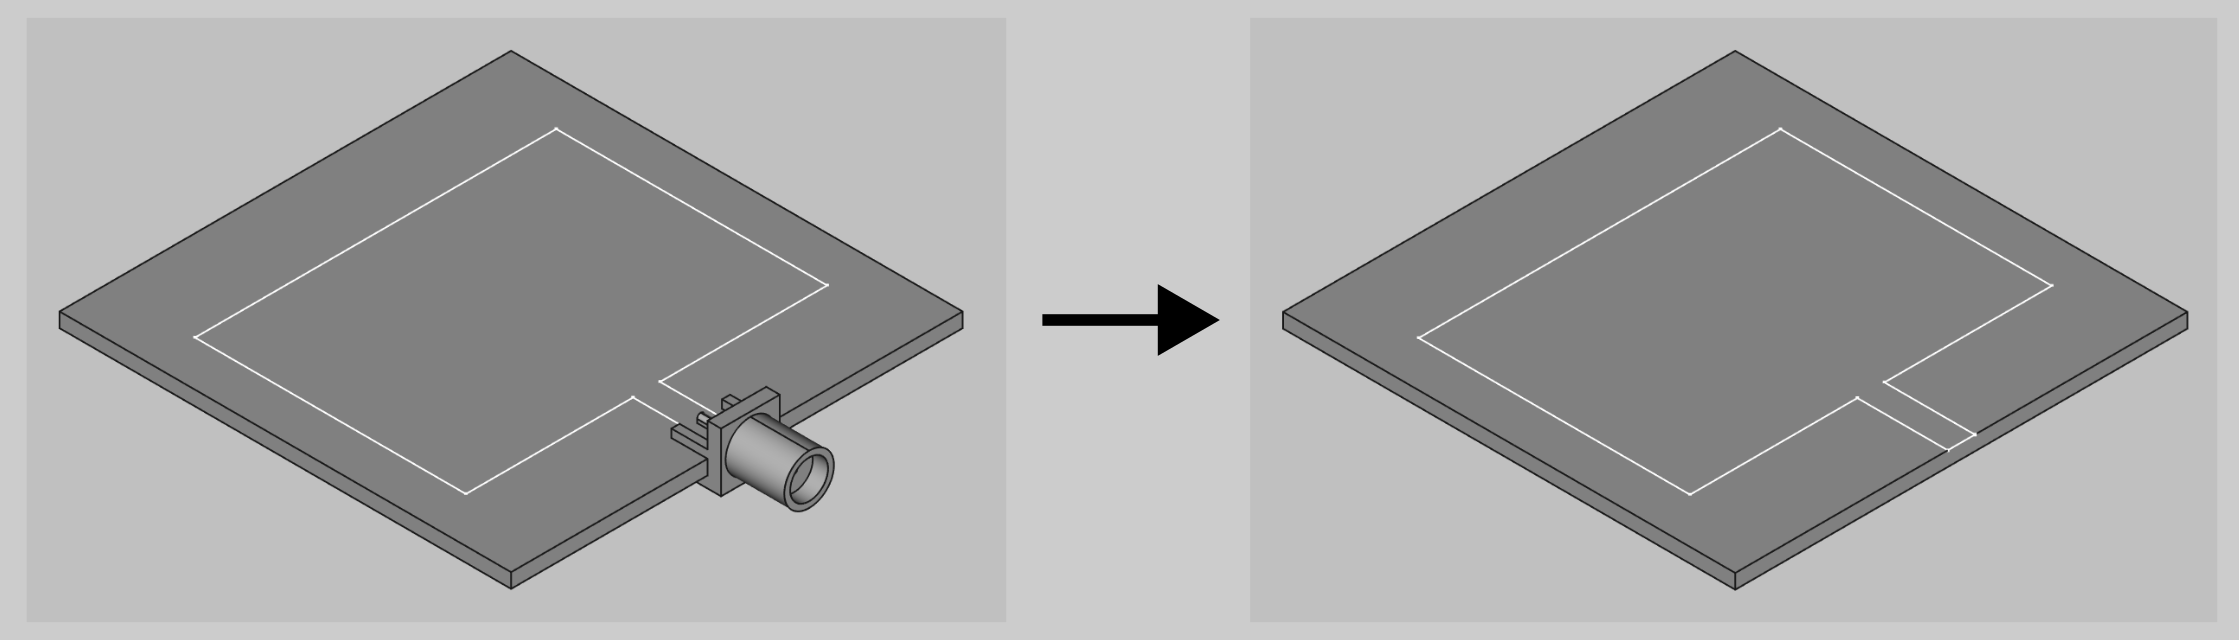 Coaxial edge connector simplification image